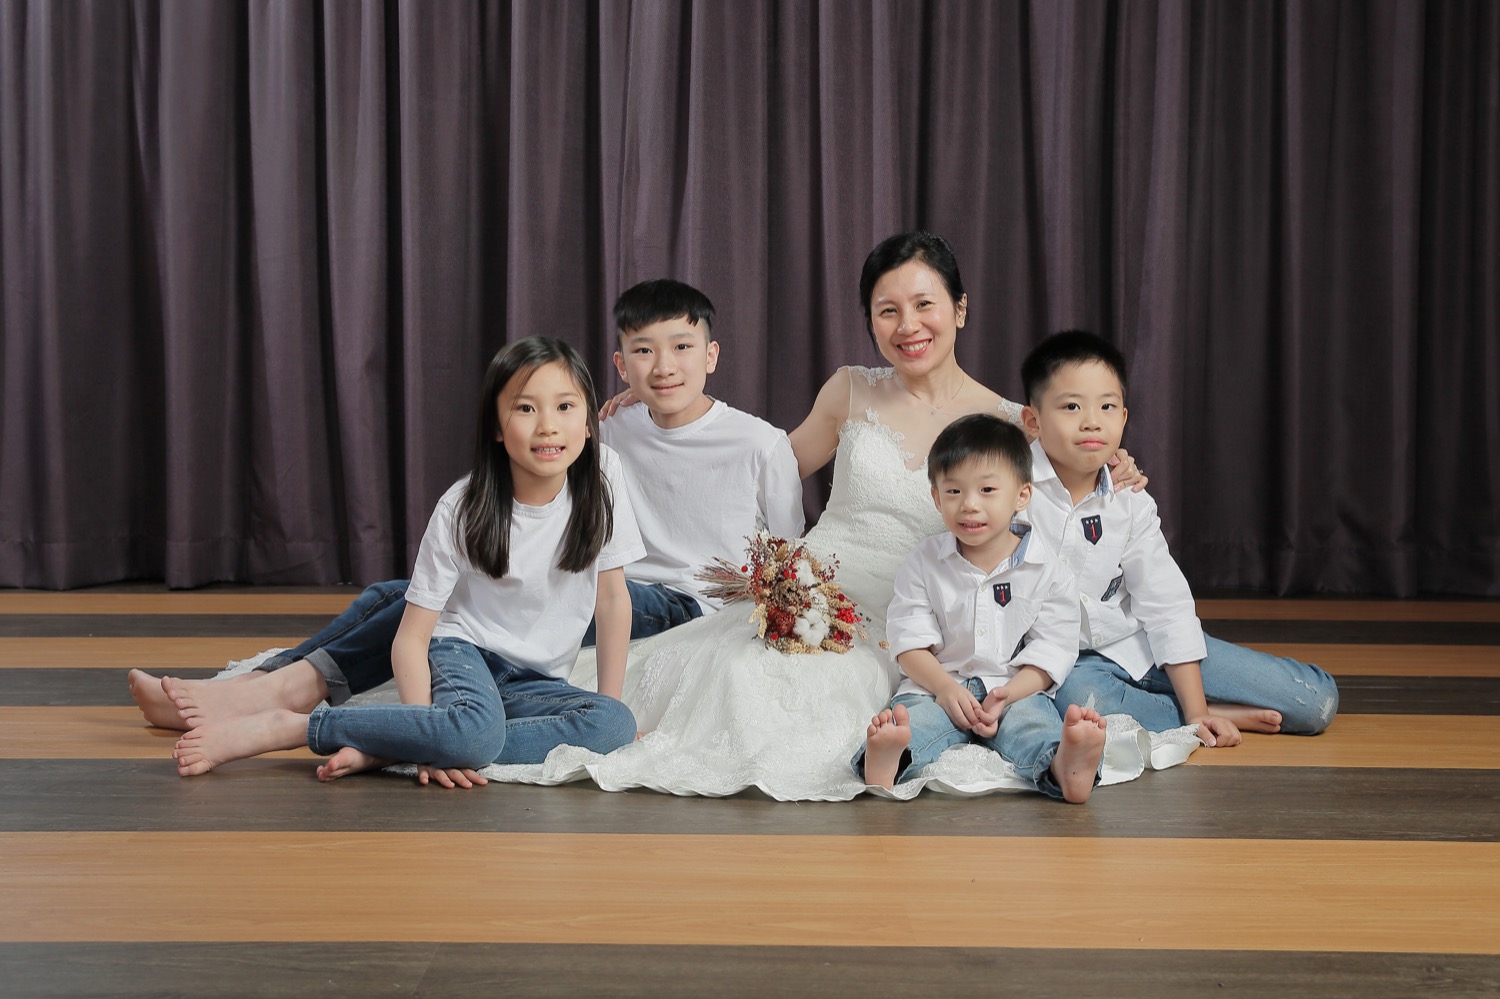 Indoor Family Photo Shoot at Jaya One Studio